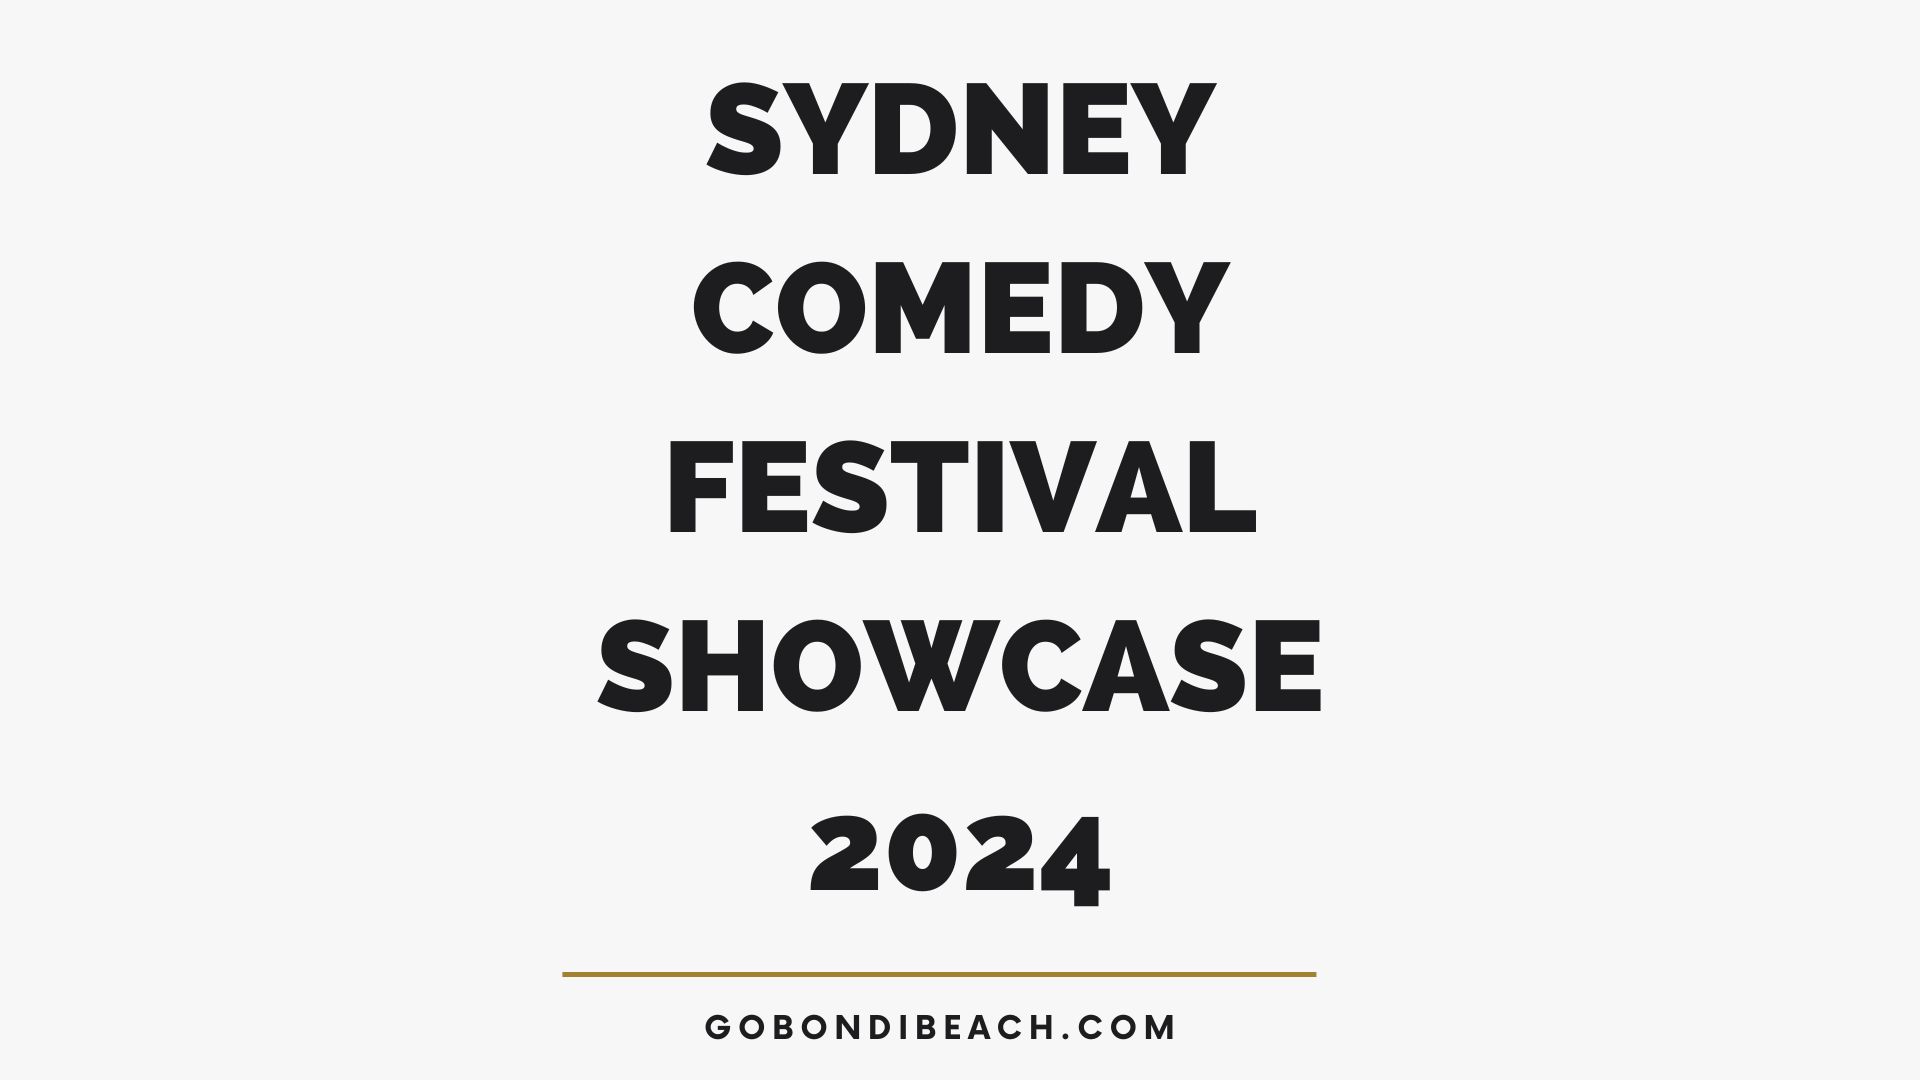 Sydney Comedy Festival Showcase 2024